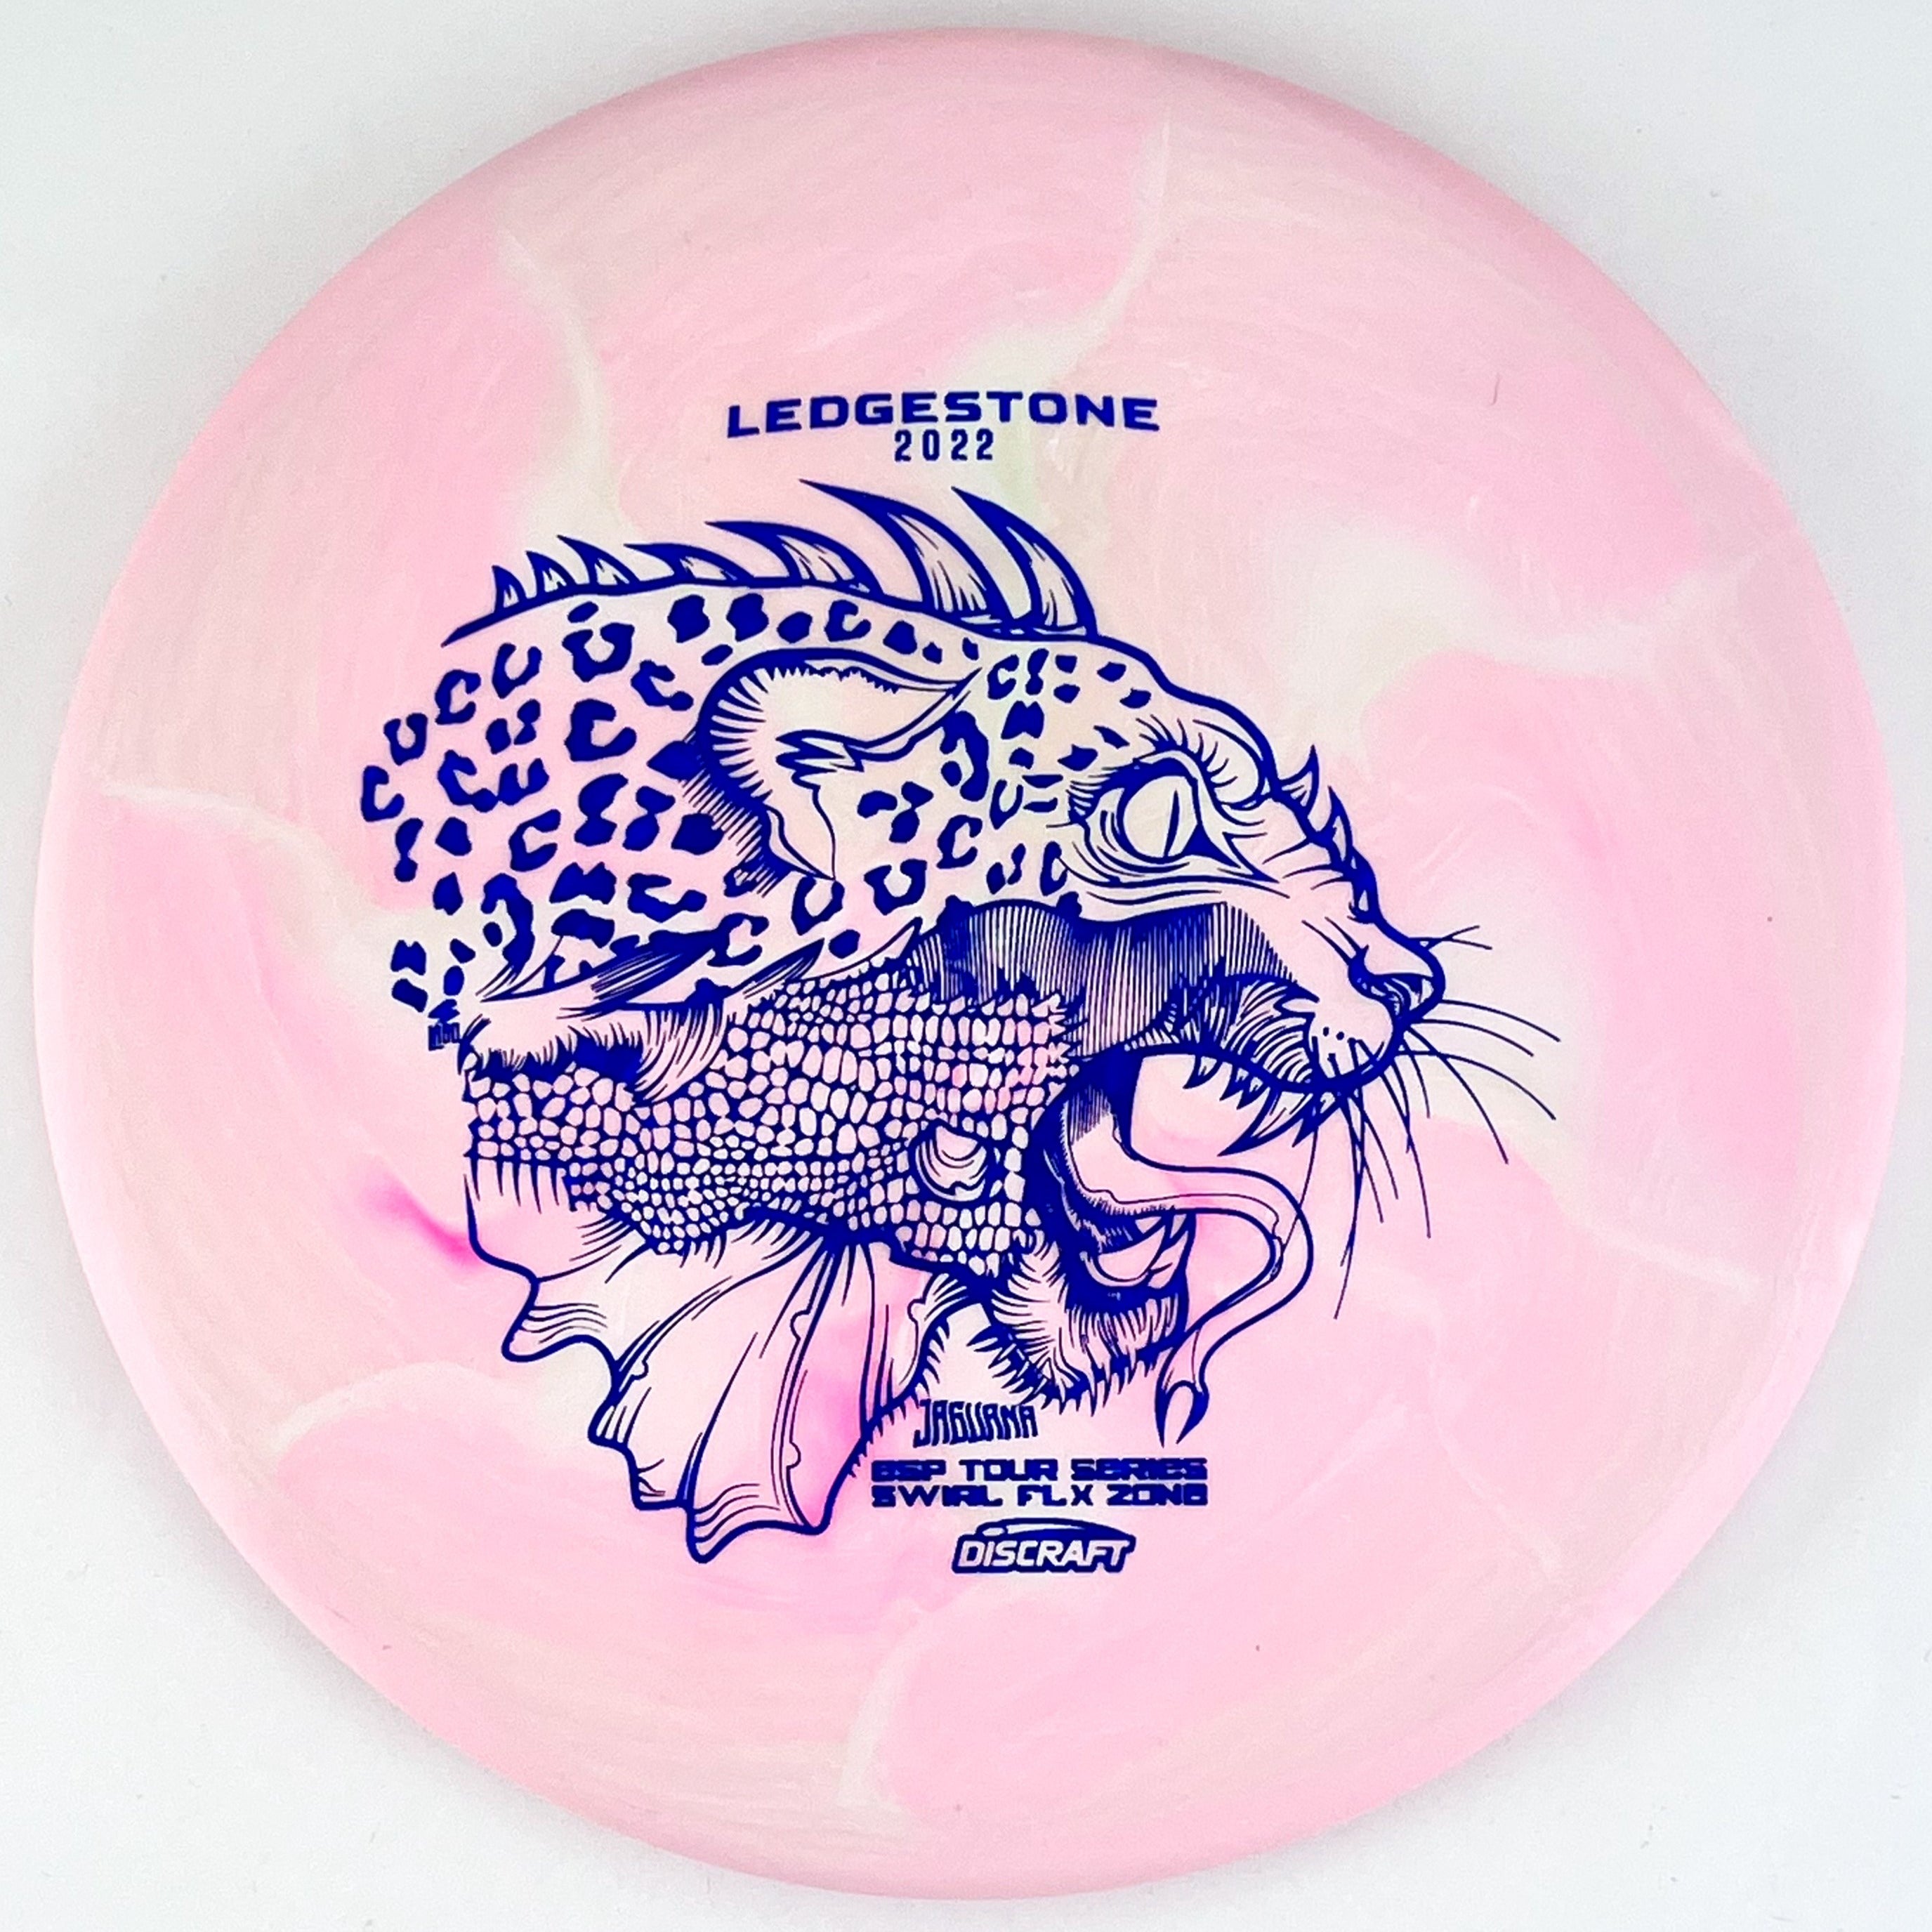 Pink 2022 Ledgestone Tour Series ESP Swirl Flx Jaguana Zone disc golf putt and approach disc from Discraft Disc Golf.